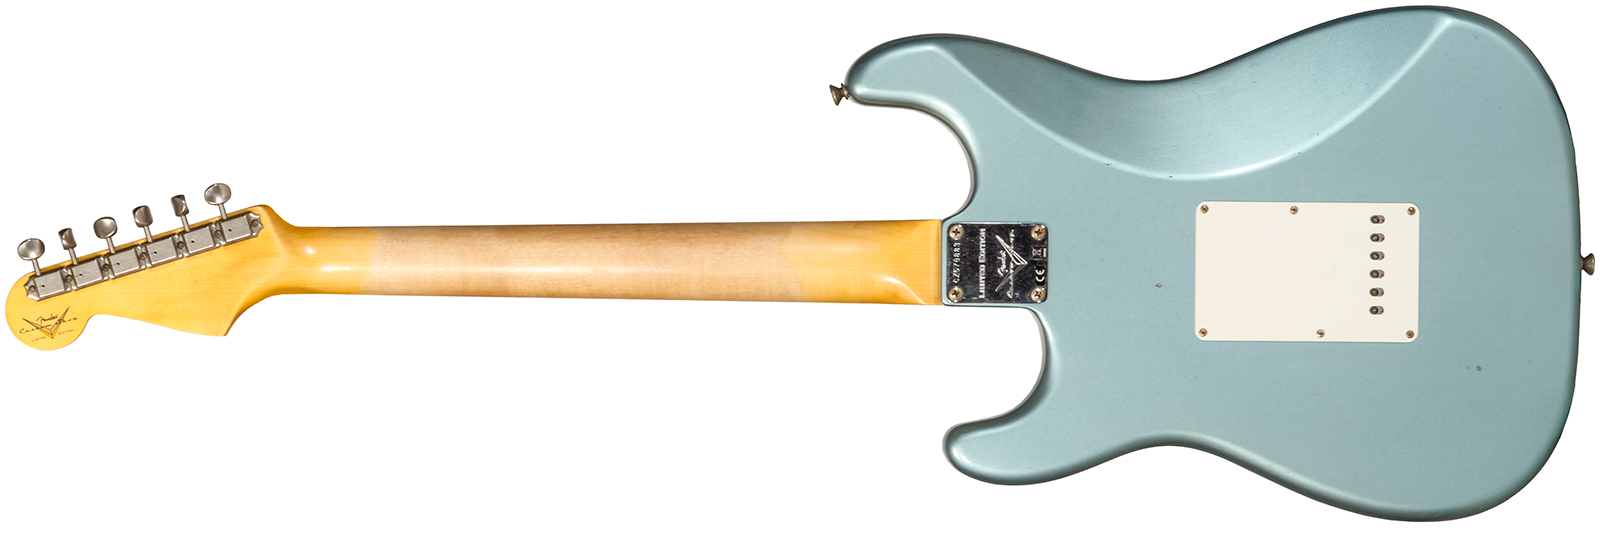 Fender Custom Shop Strat 1959 3s Trem Rw #cz570883 - Journeyman Relic Teal Green Metallic - Guitarra eléctrica con forma de str. - Variation 1